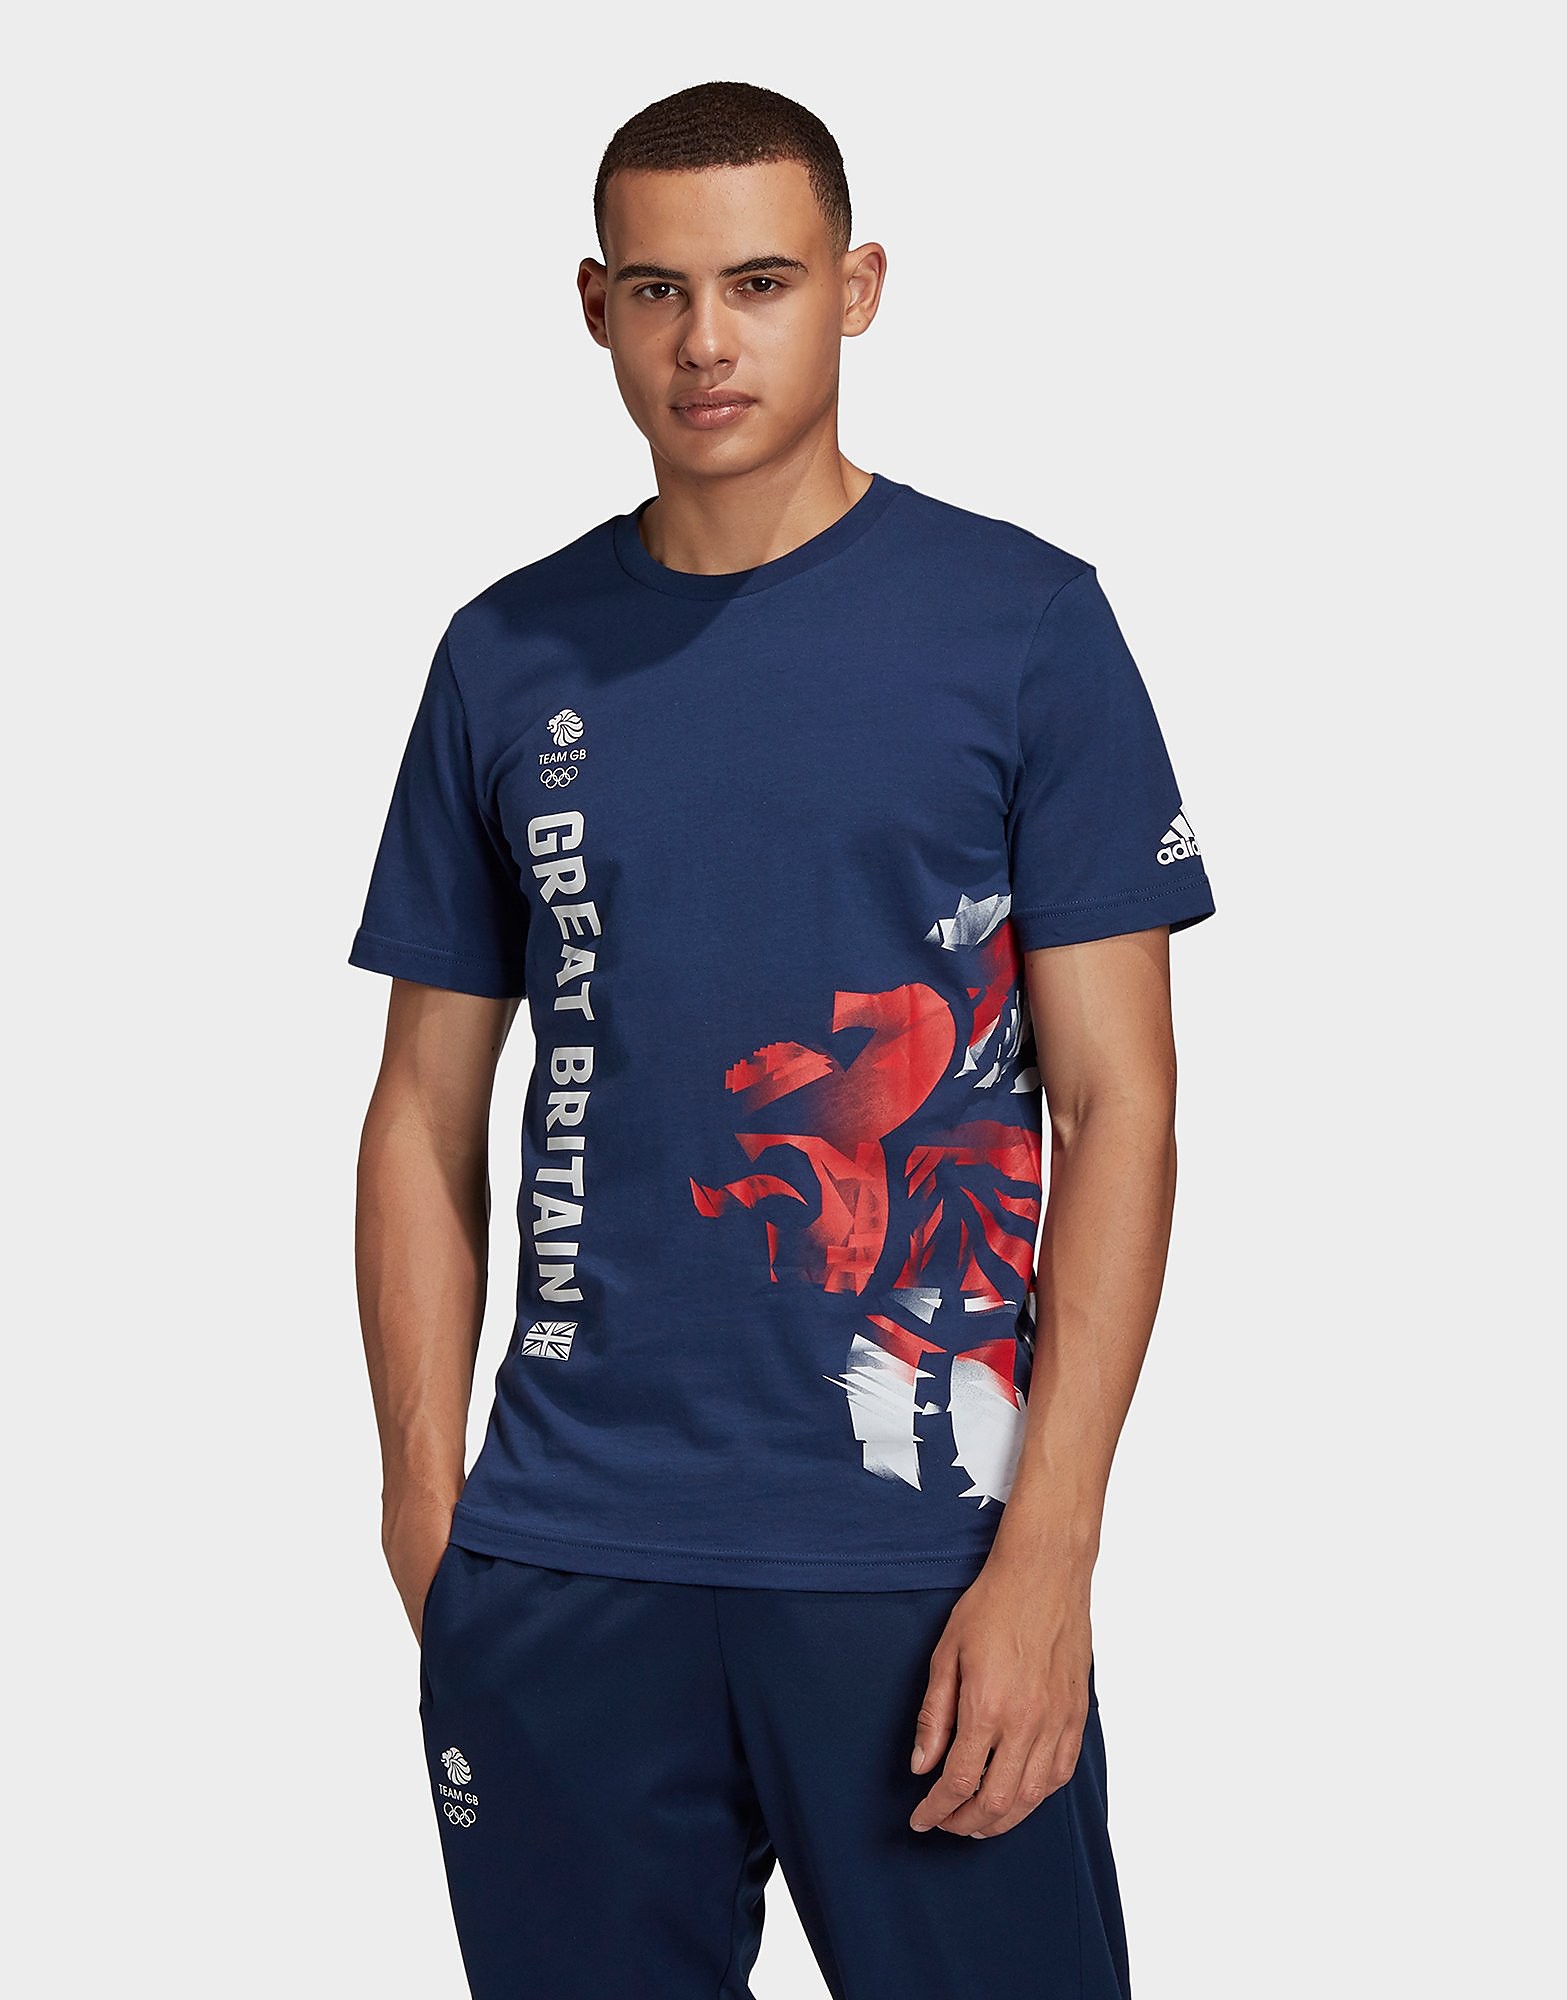 Adidas Team GB Olympics Graphic T-Shirt, Blå